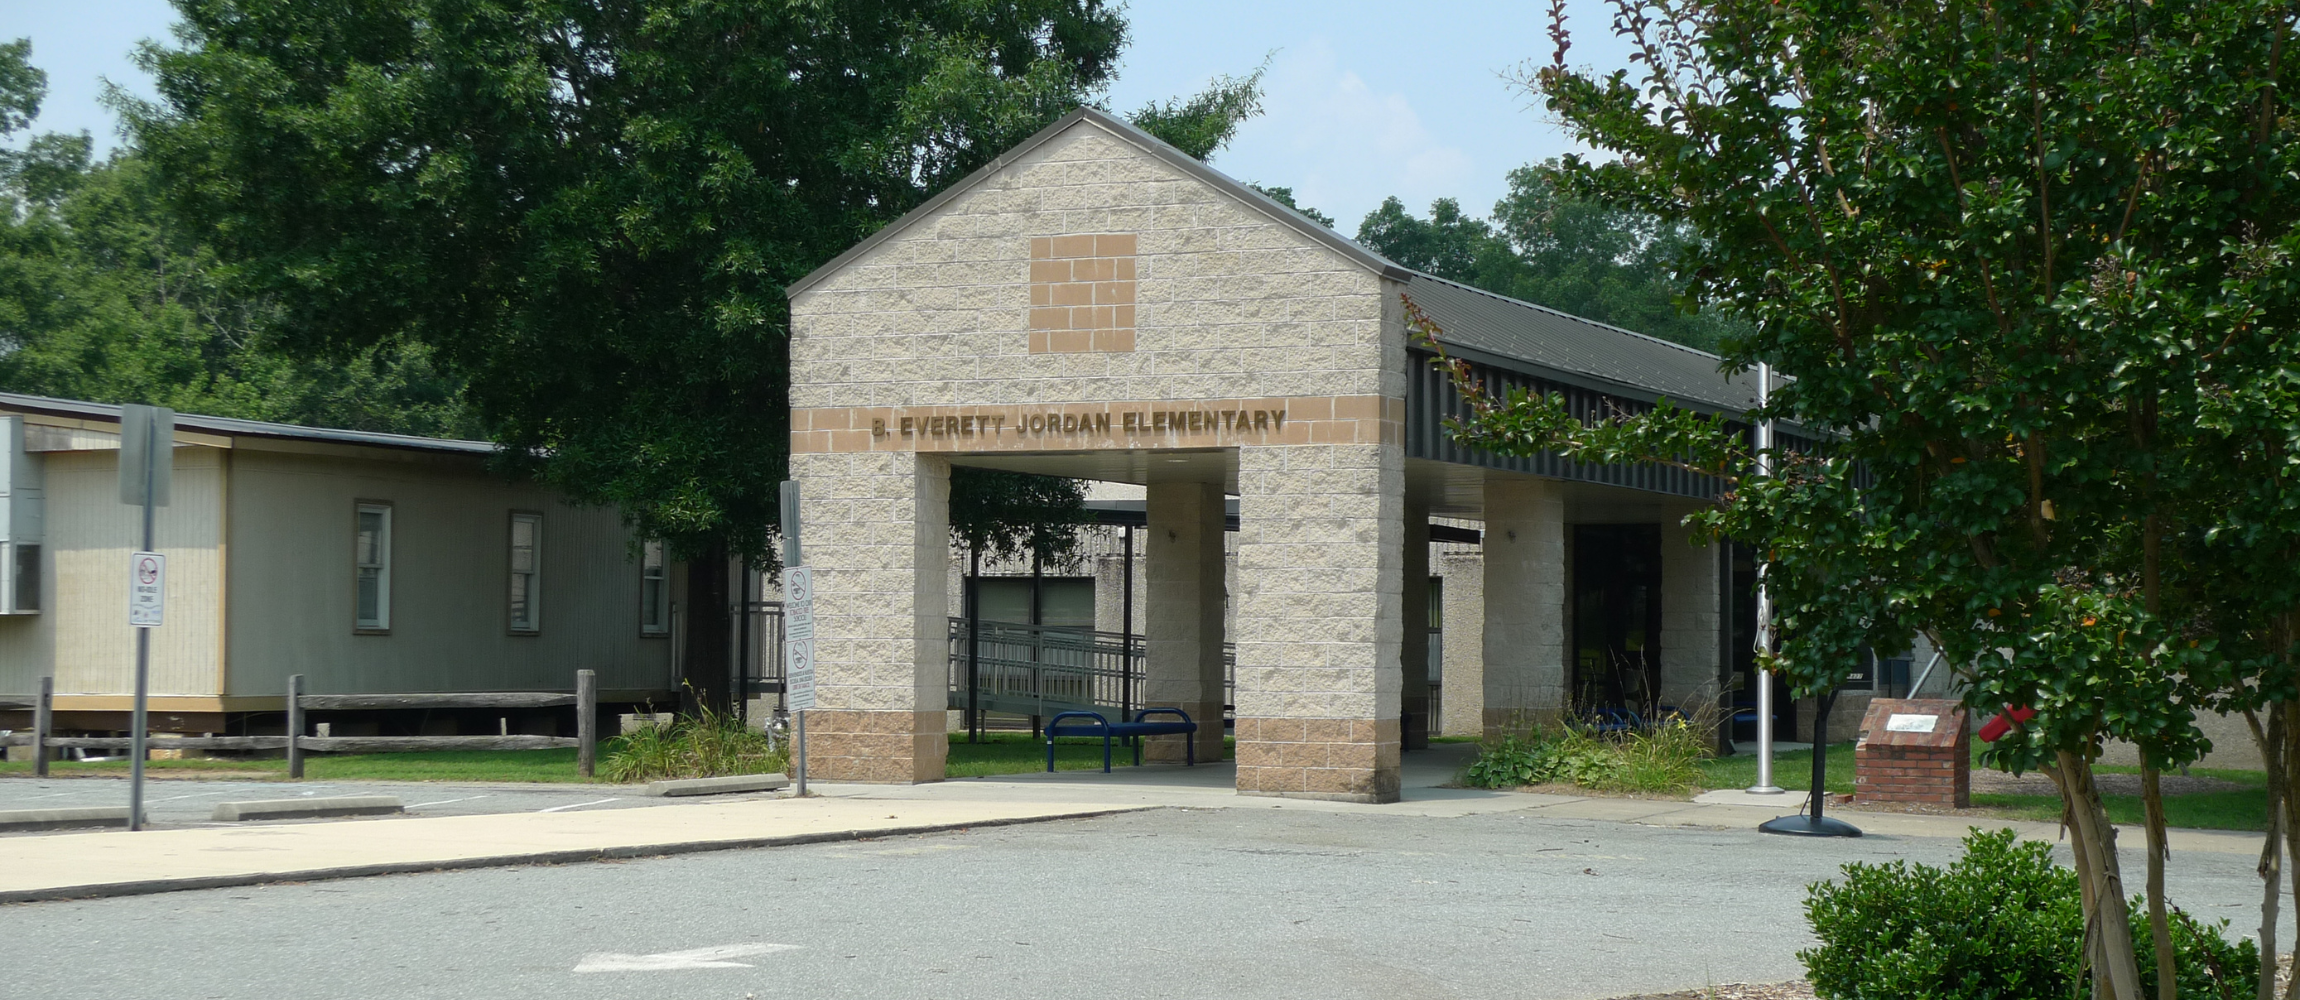 B. Everett Jordan Elementary School | Home